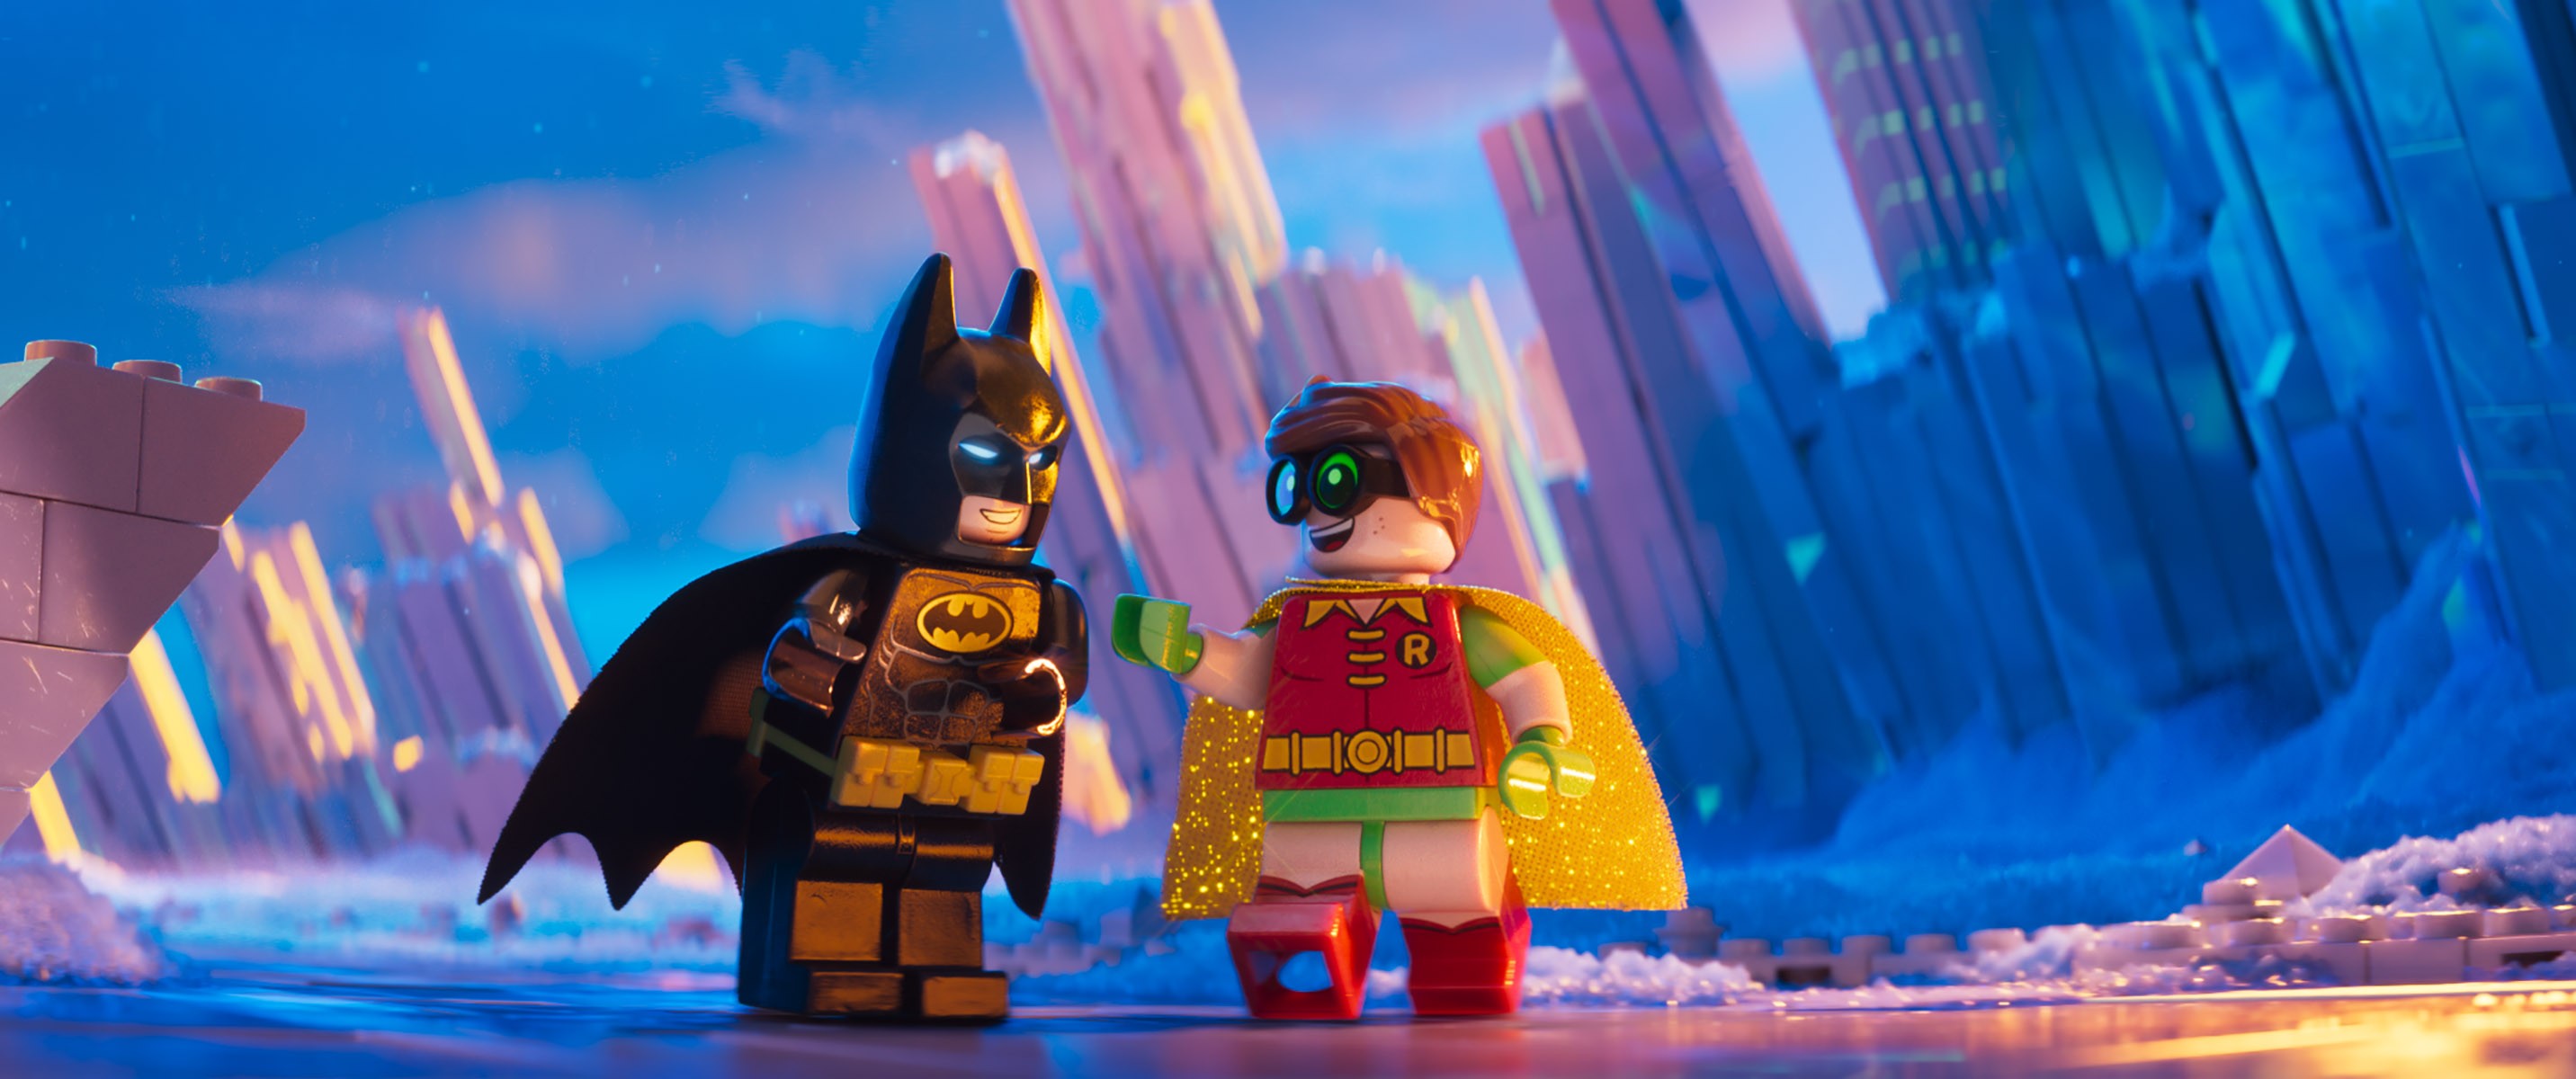 The Lego Batman Movie: Trailer 4 - Trailers & Videos - Tomatoes